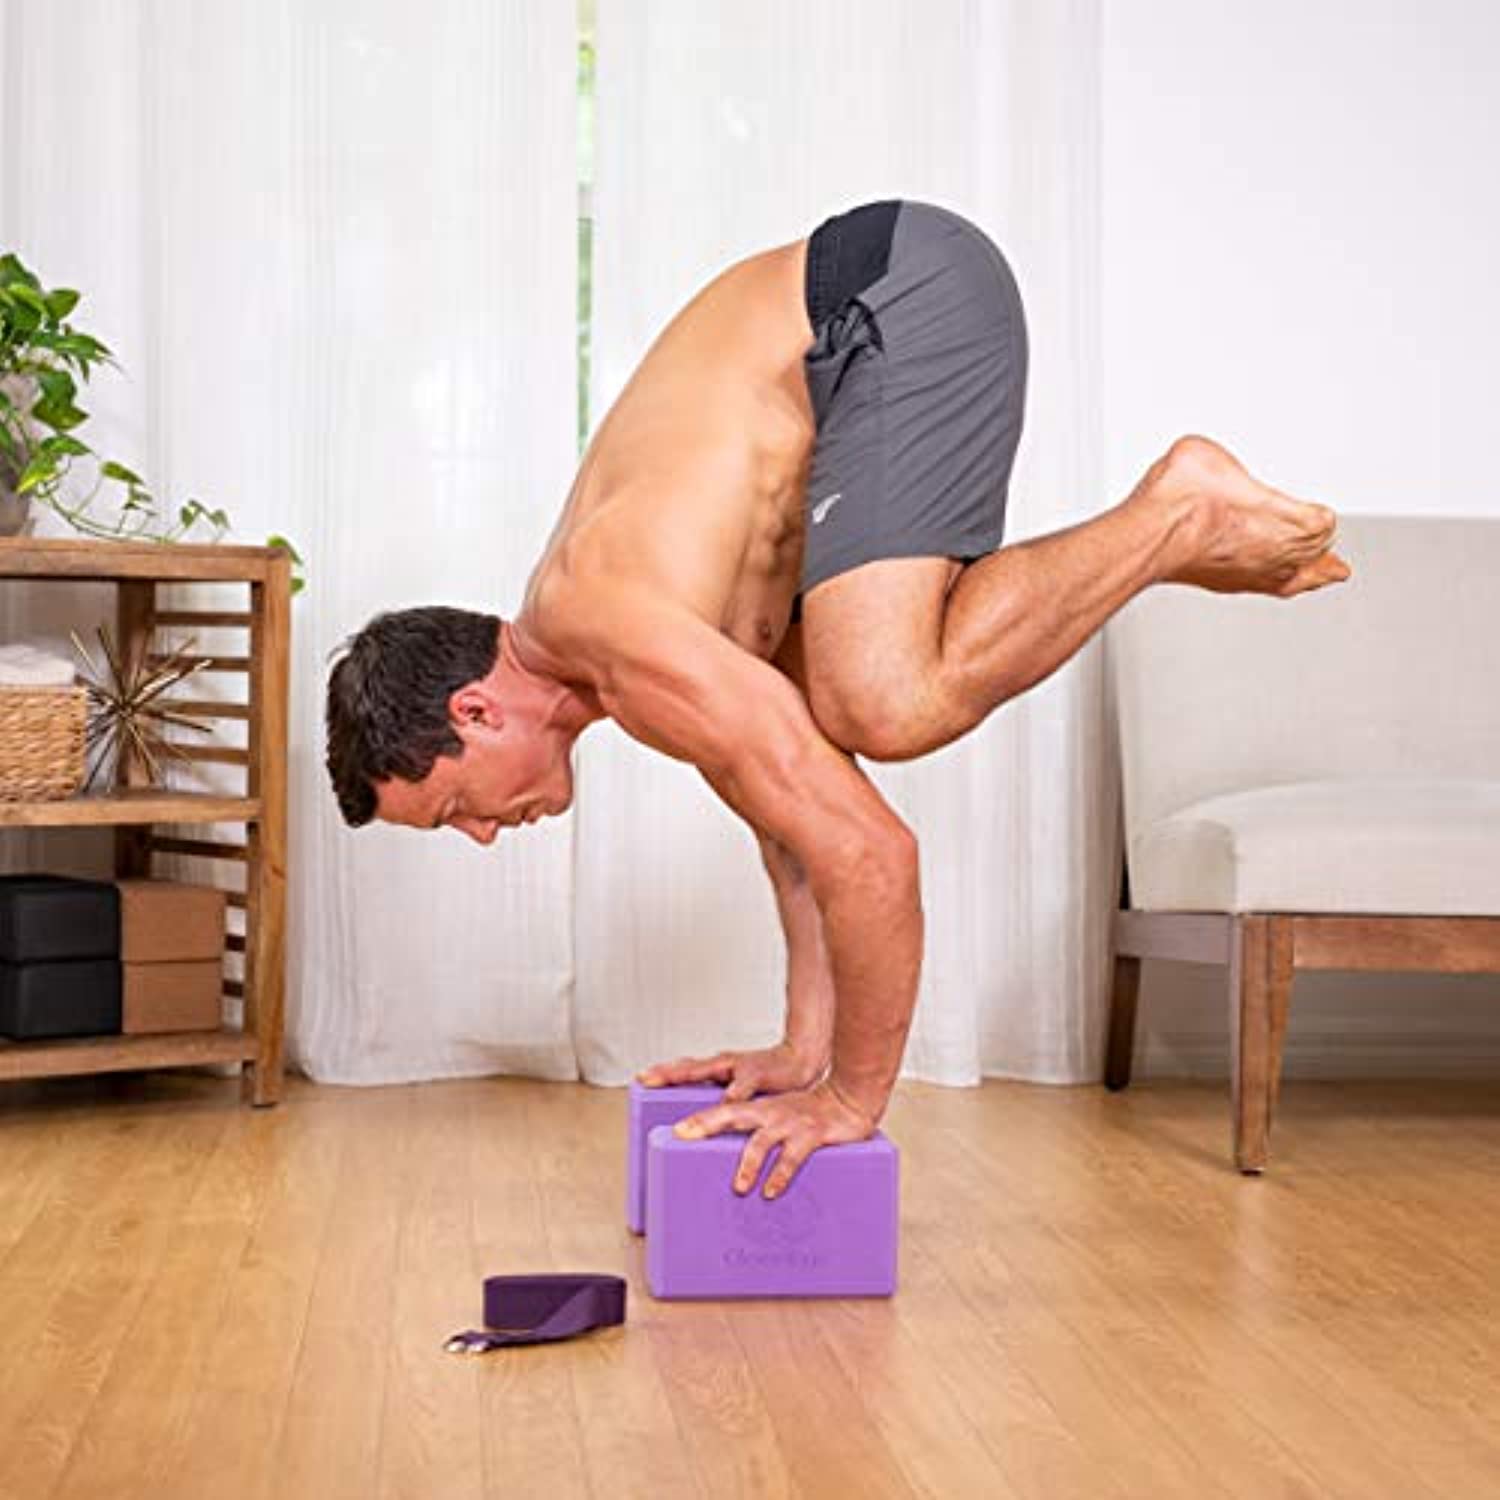 Gaiam Essentials - Bloque de yoga (set de 2), espuma de EVA suave y  antideslizante, multiuso